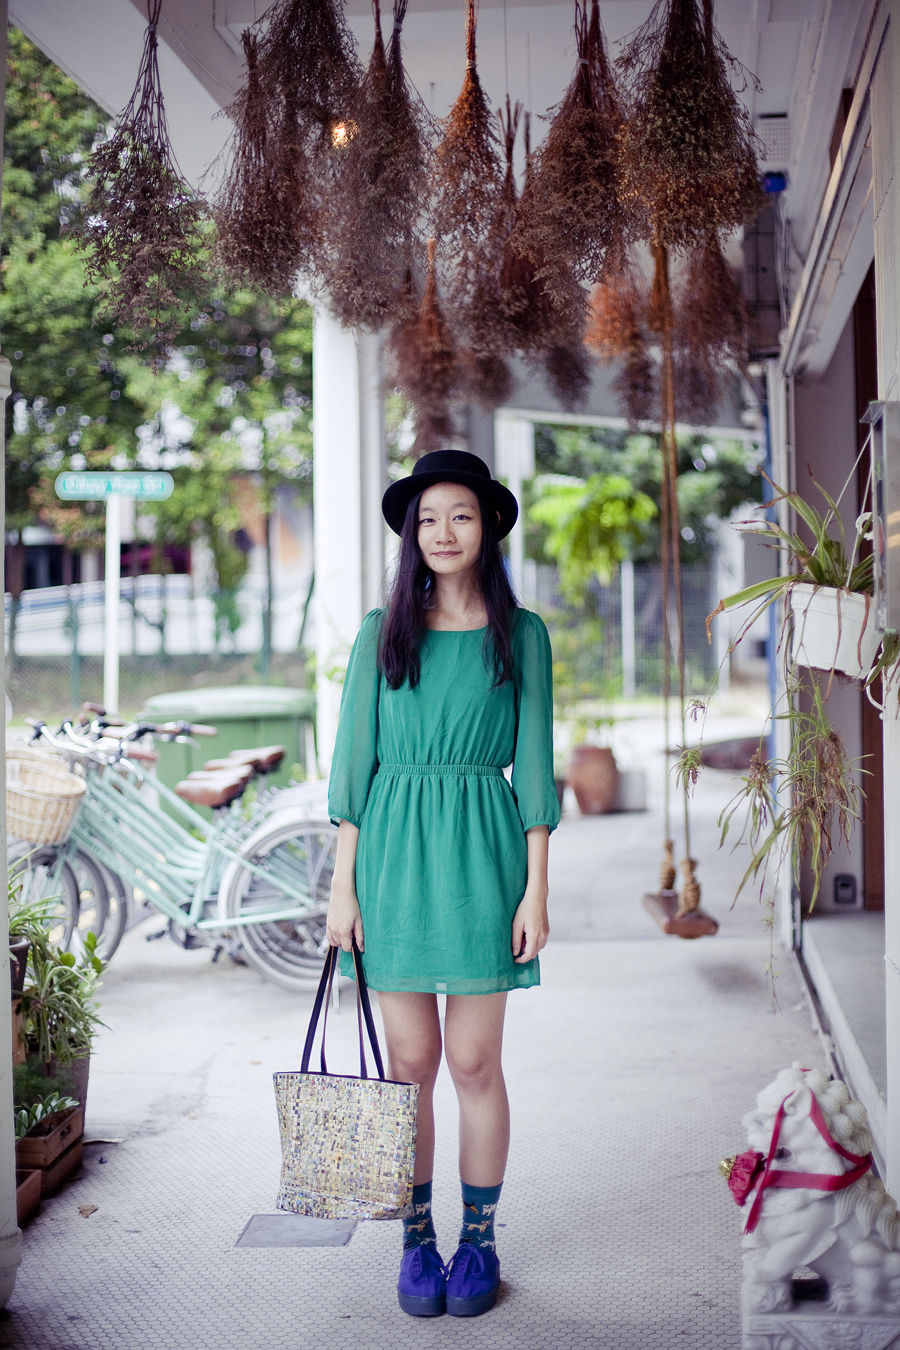 Outfit details: Forever 21 green chiffon dress, black Taobao hat, teal Taobao dog pattern socks, blue H&M platform shoes.